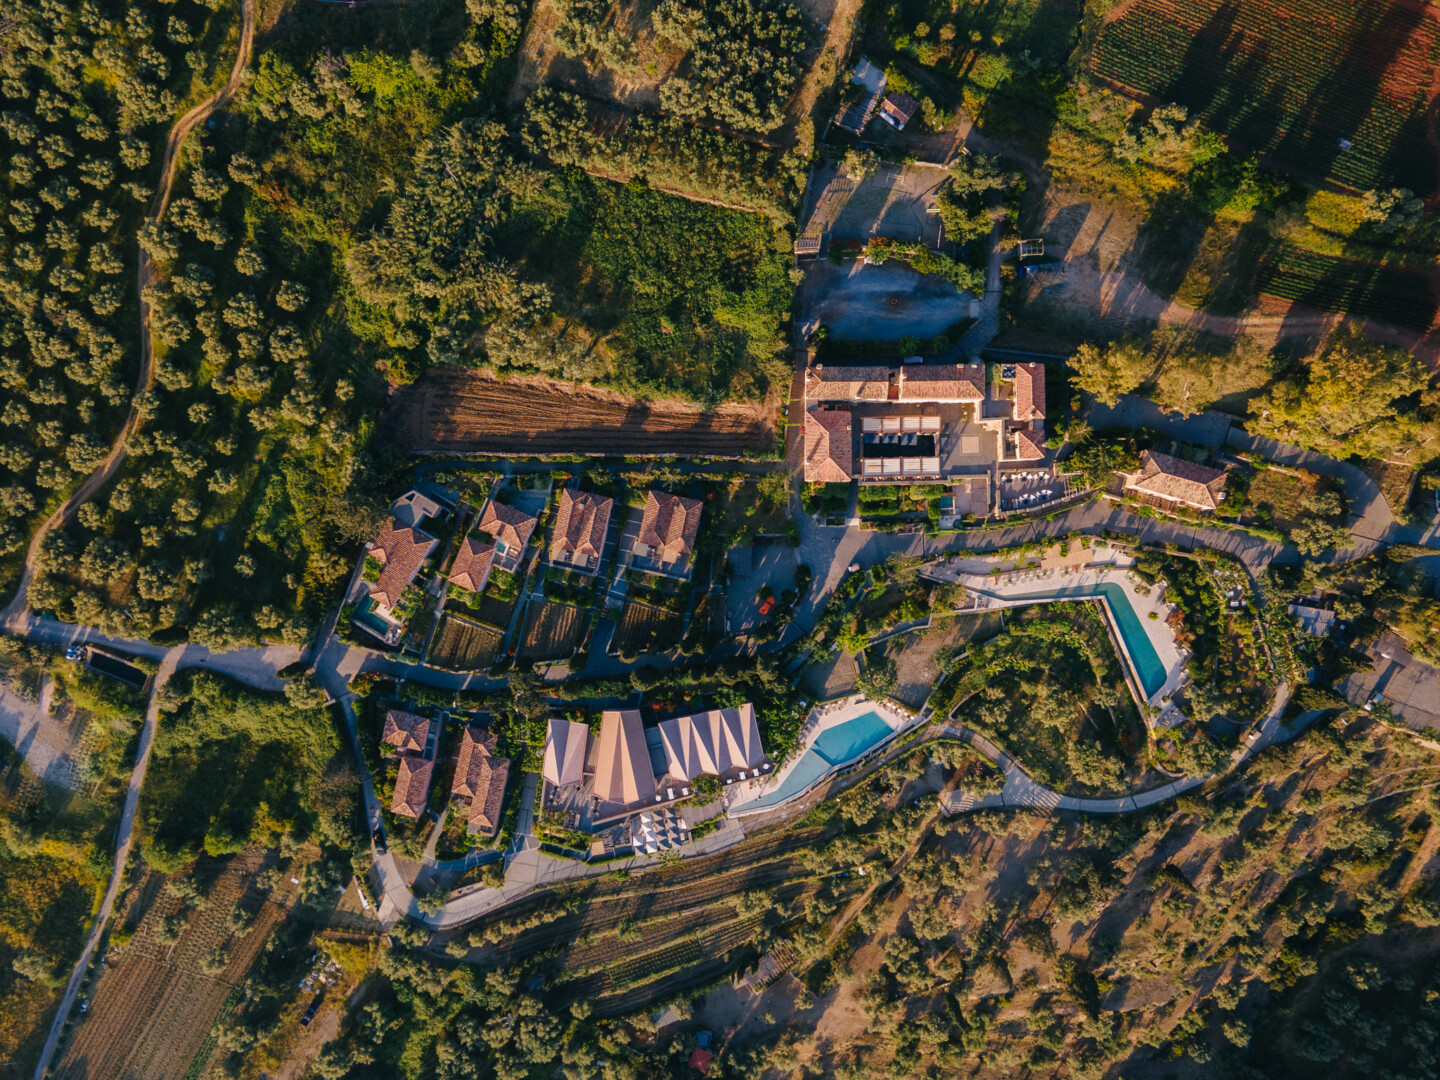 Kinsterna Hotel - aerial view